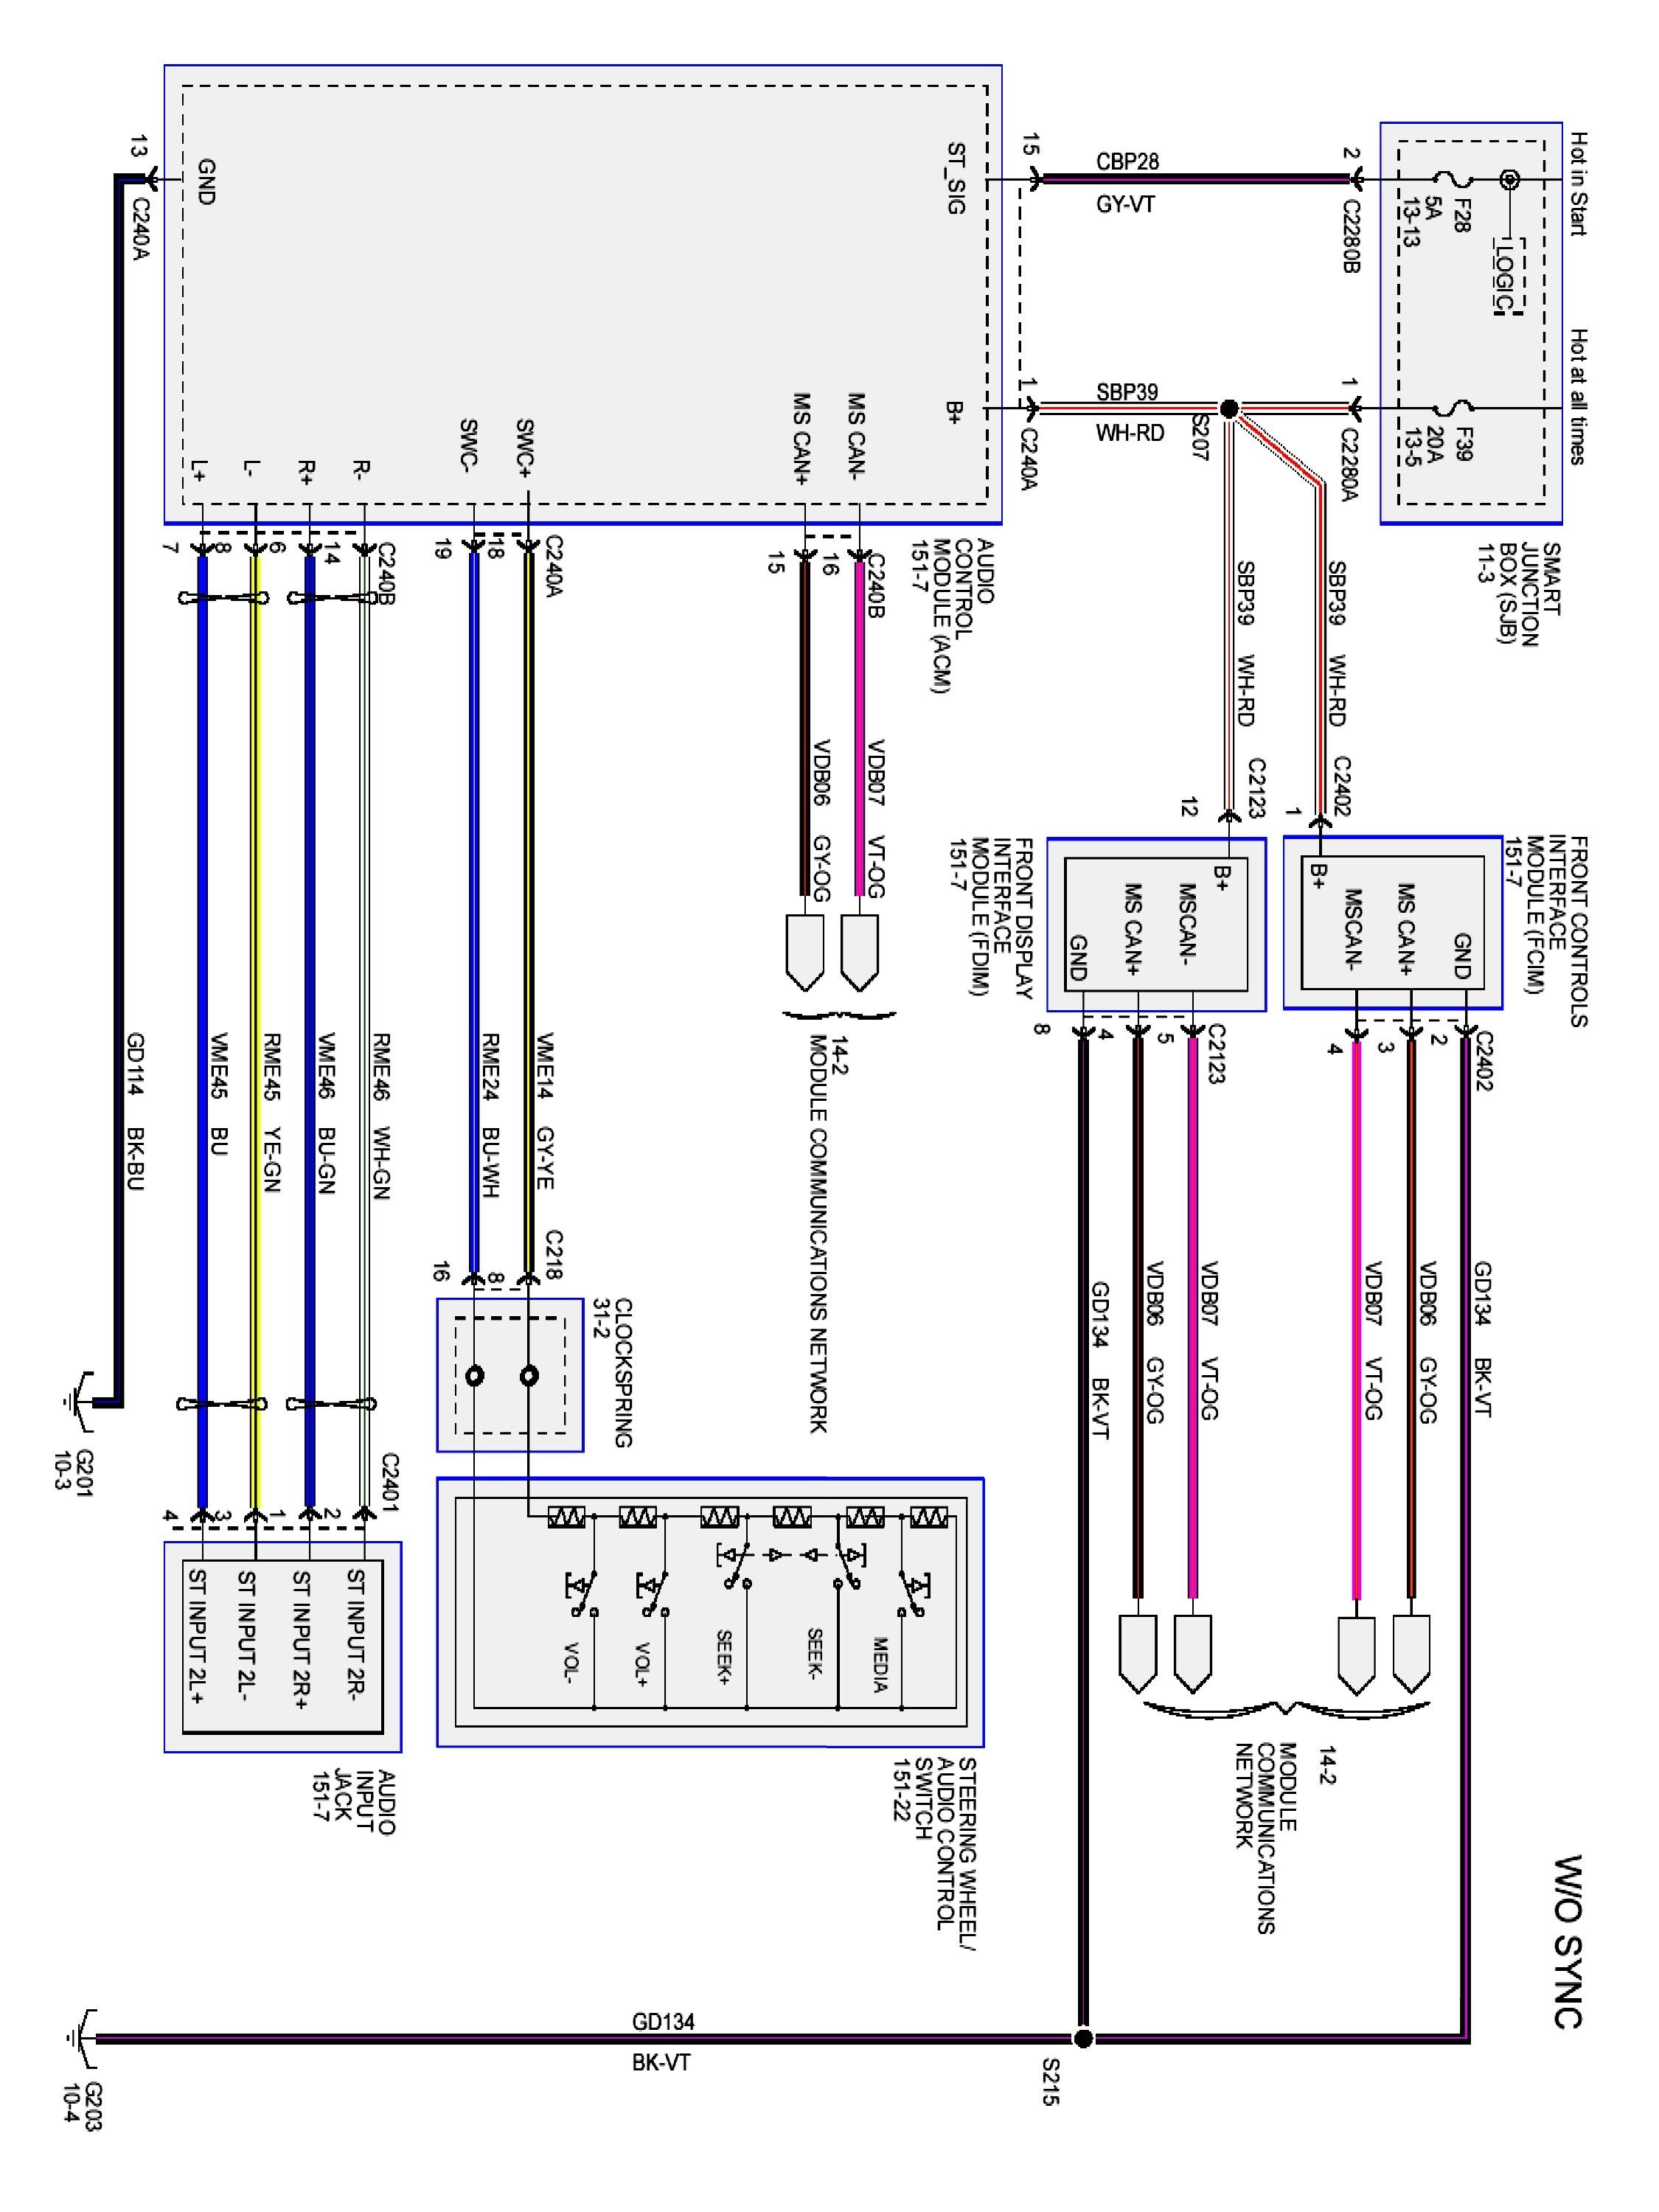 2003 Ford Taurus Wiring Diagram Pictures - Wiring Diagram Sample